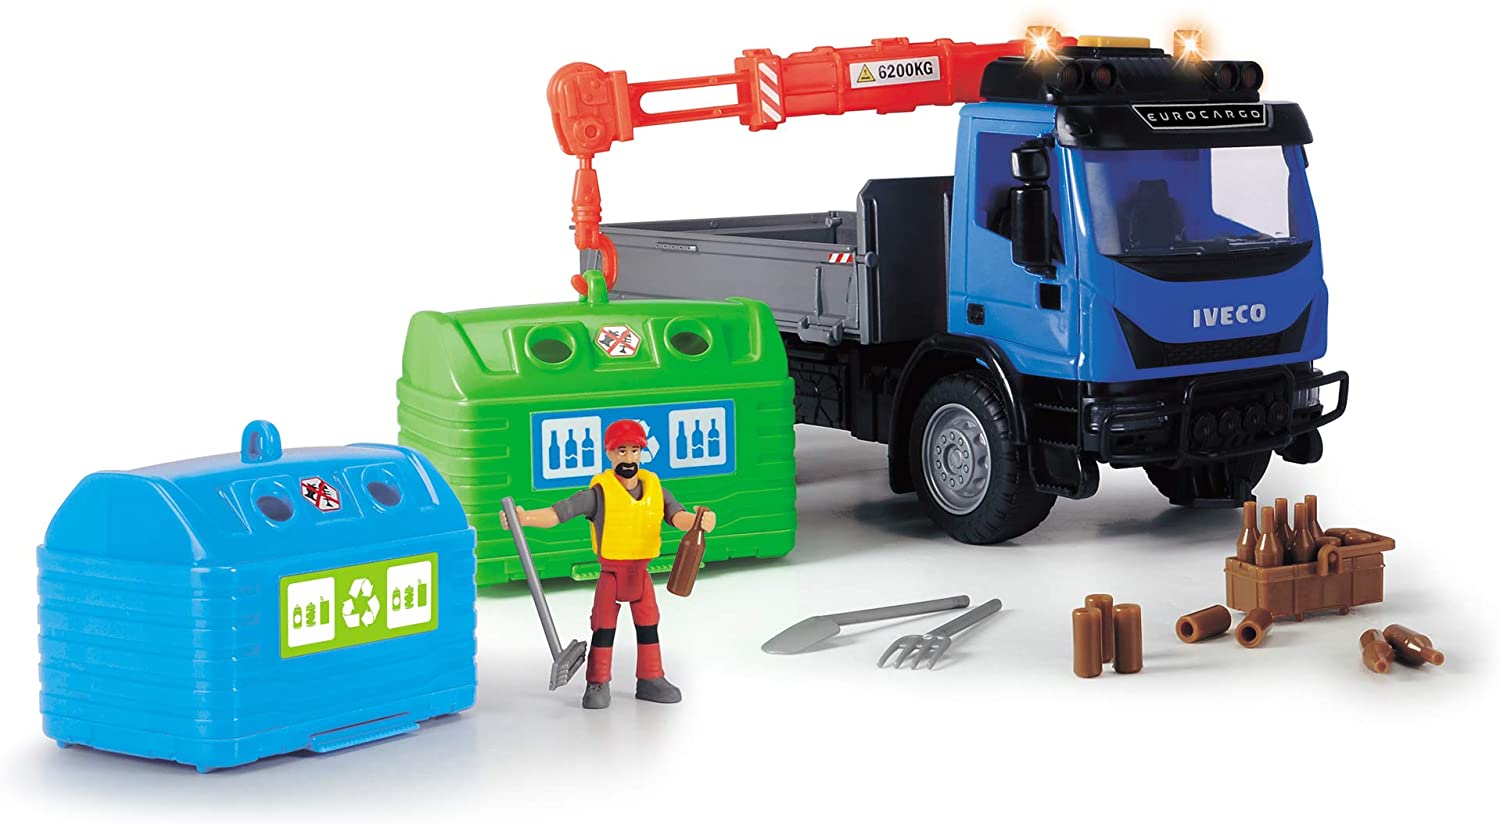 Set de joaca - Iveco Recycling Container Set | Dickie Toys - 3